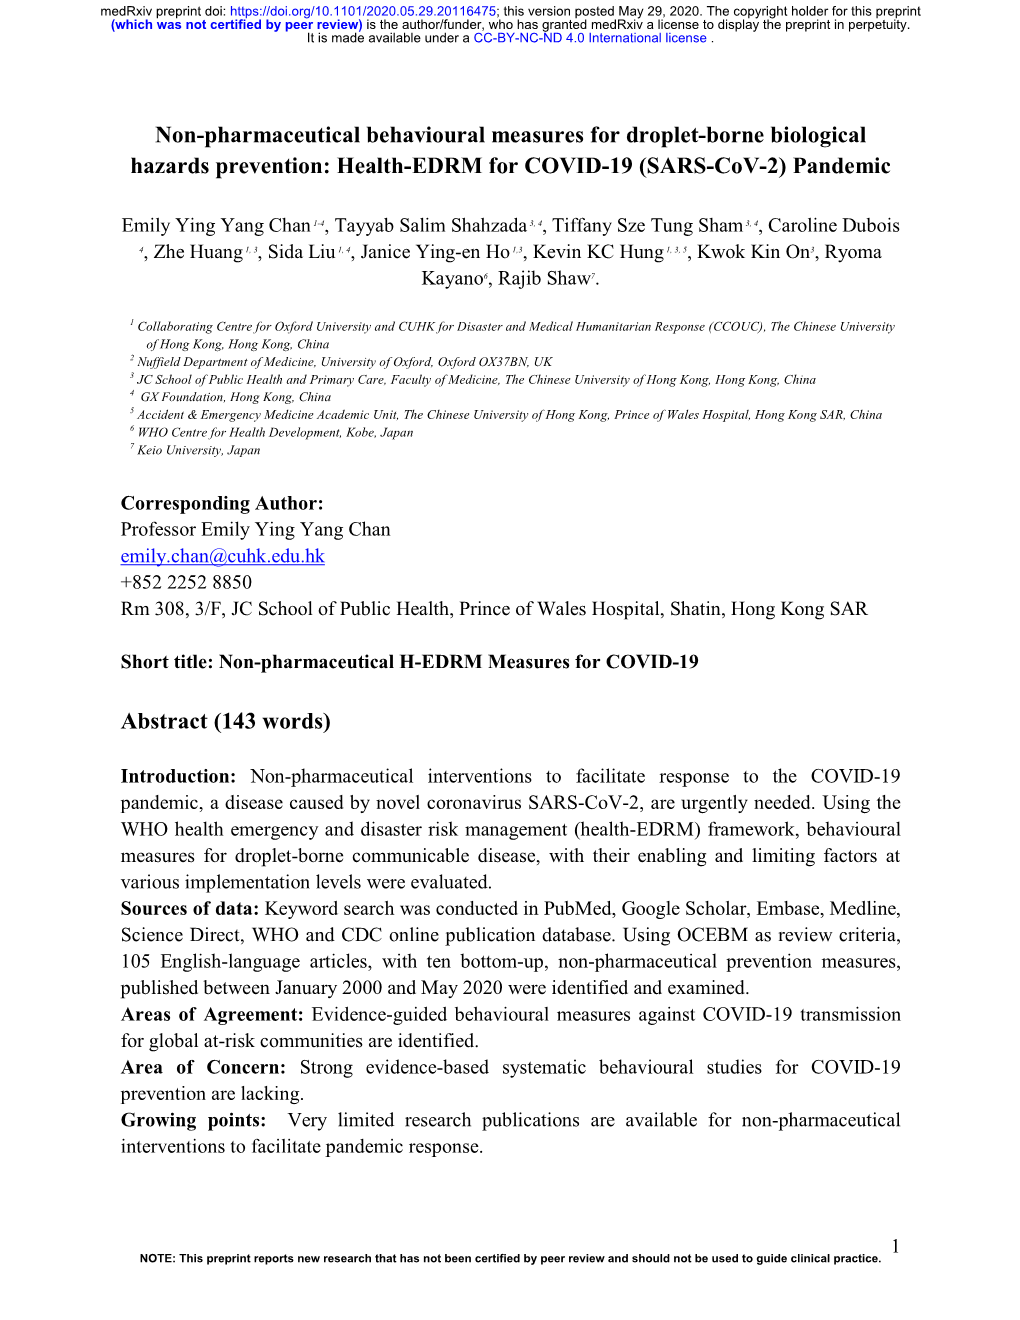 Health-EDRM for COVID-19 (SARS-Cov-2) Pandemic